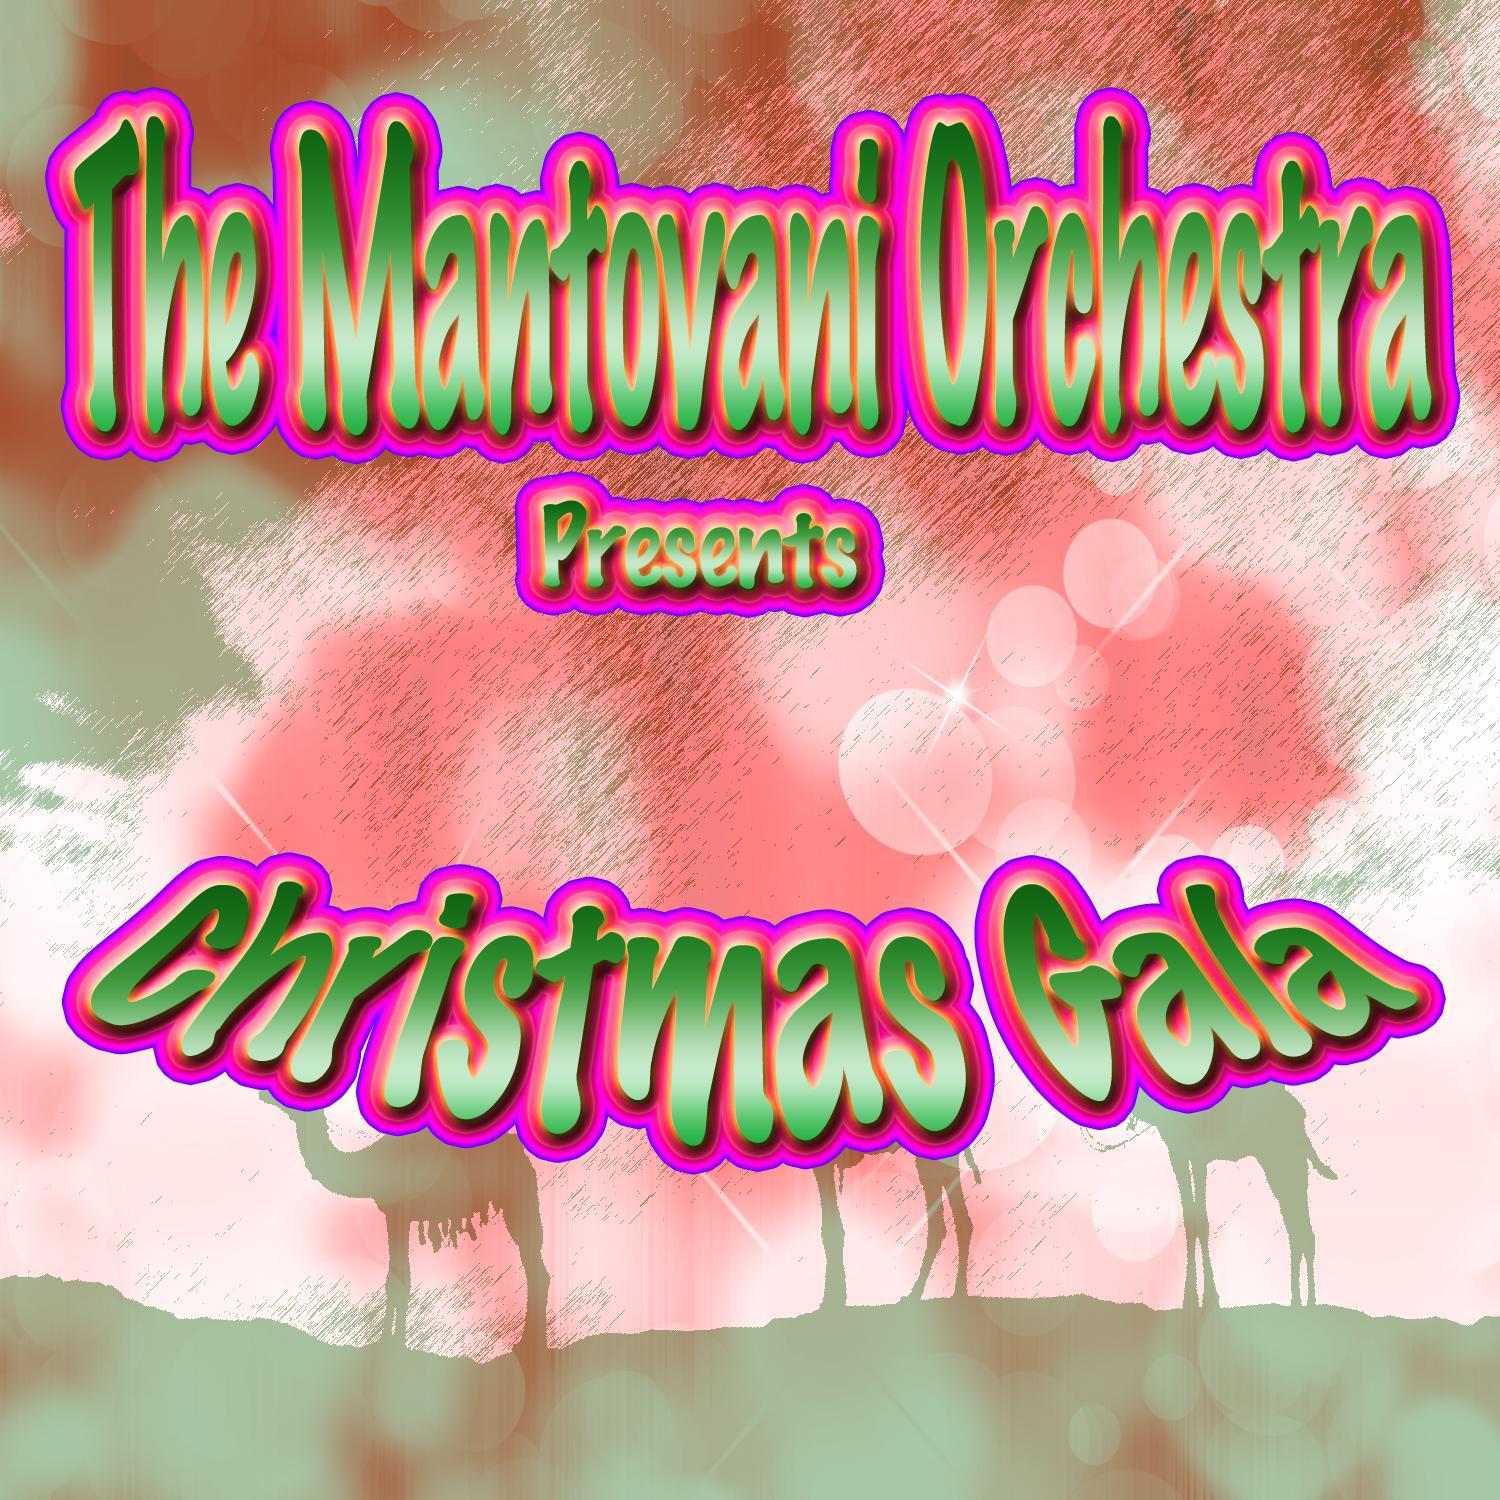 The Mantovani Orchestra Presents Christmas Gala